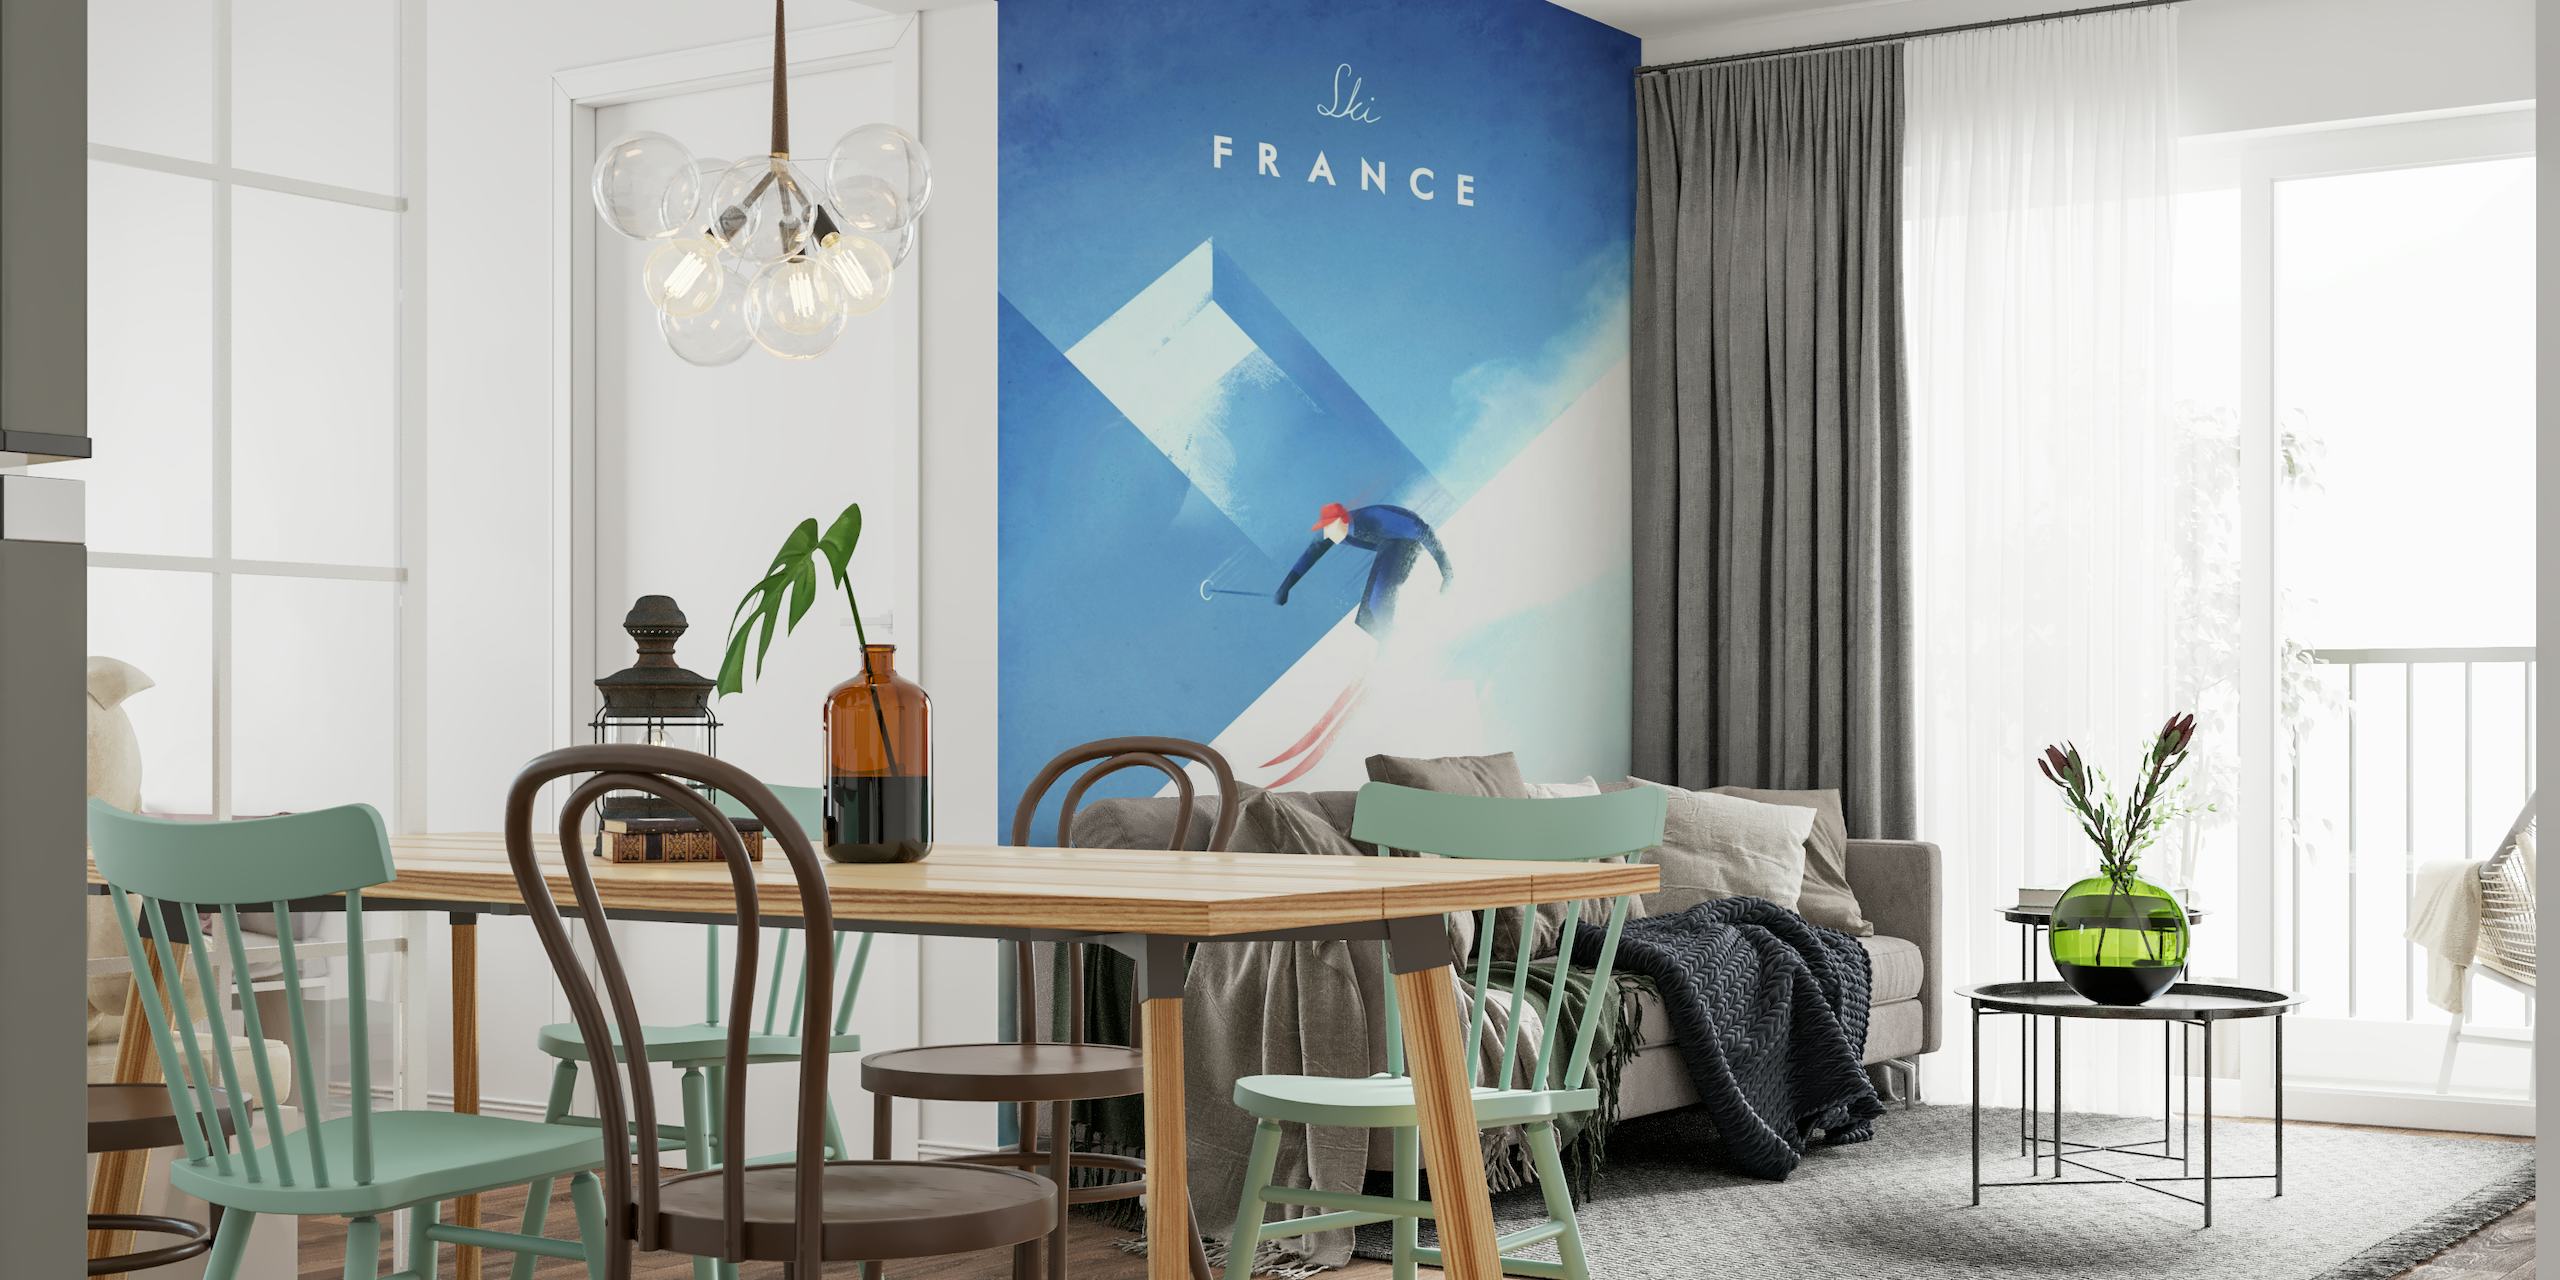 Ski France Travel Poster behang